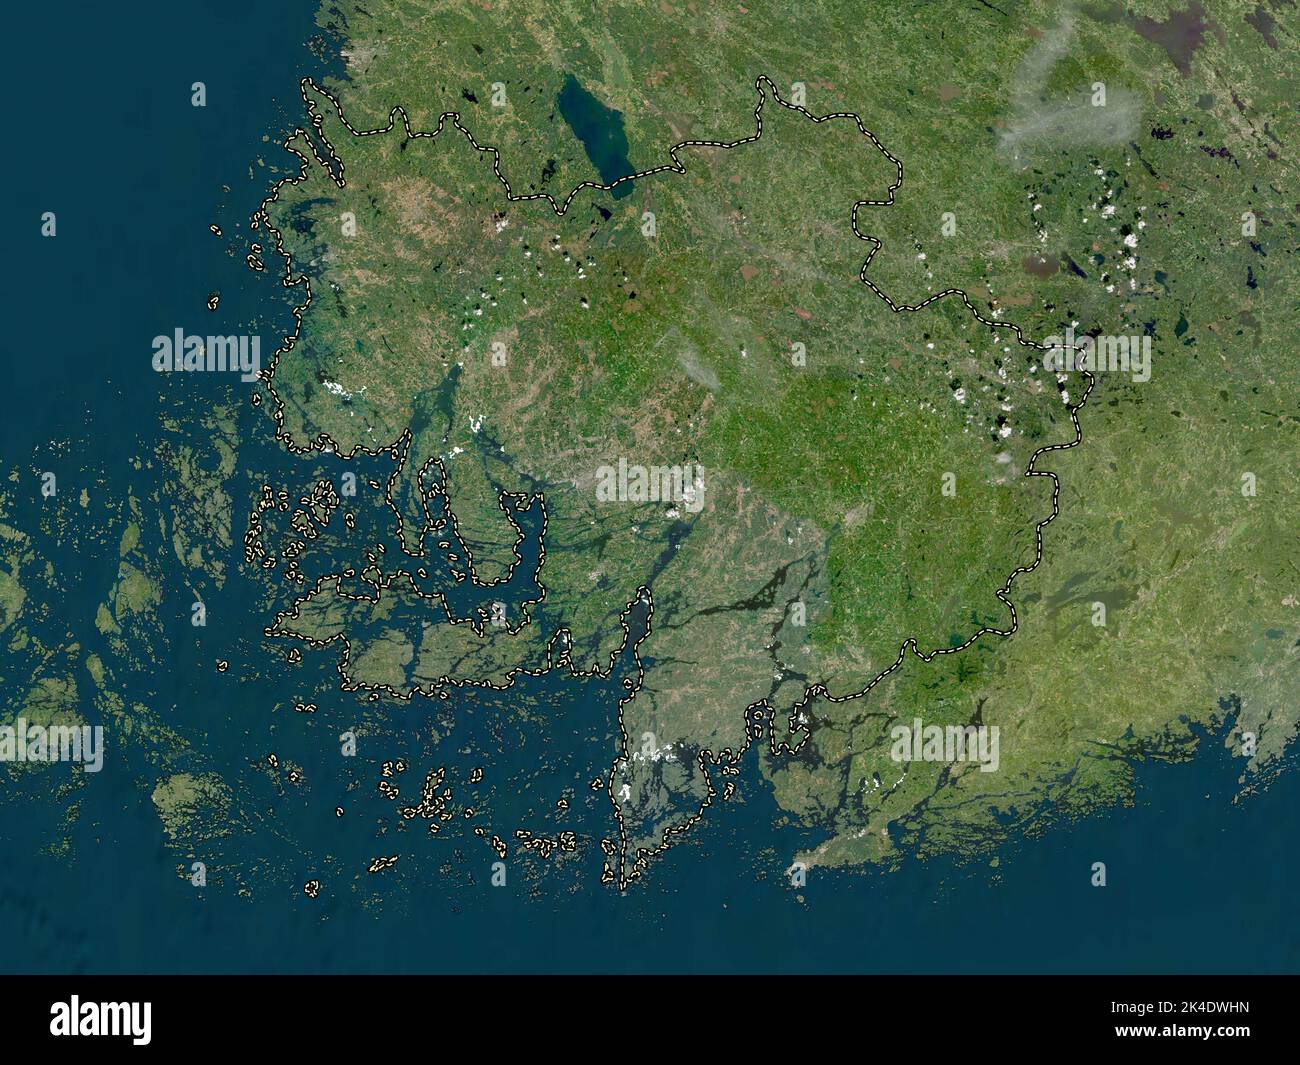 Southwest Finland, region of Finland. Low resolution satellite map Stock Photo